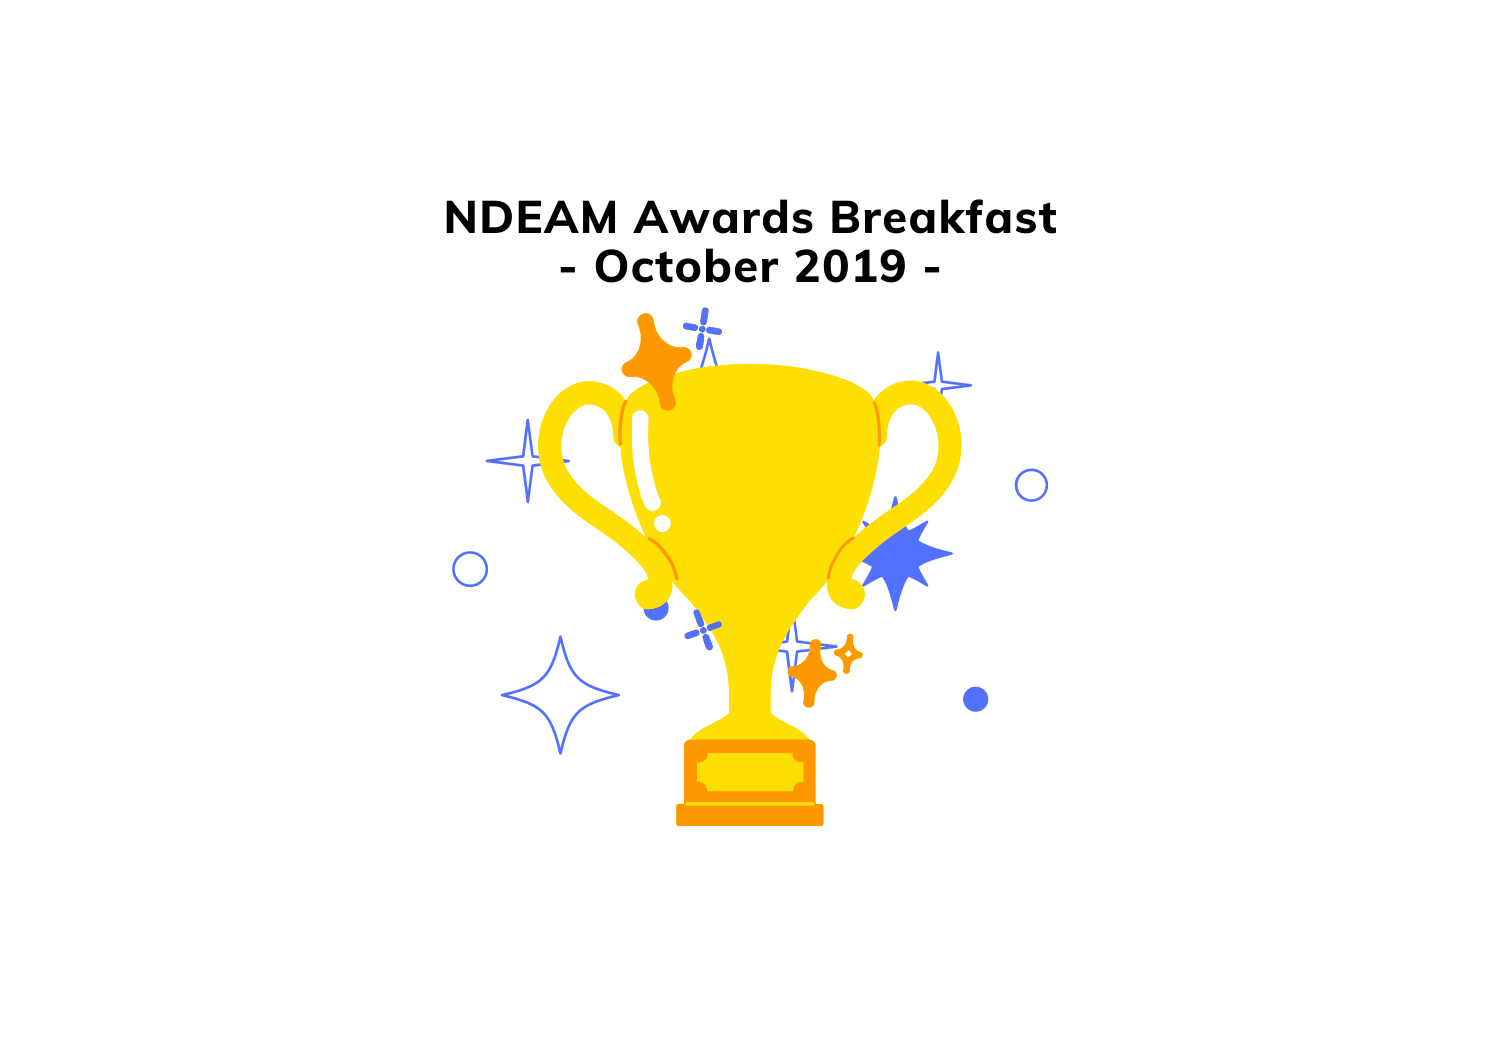 NDEAM Awards Breakfast 2019